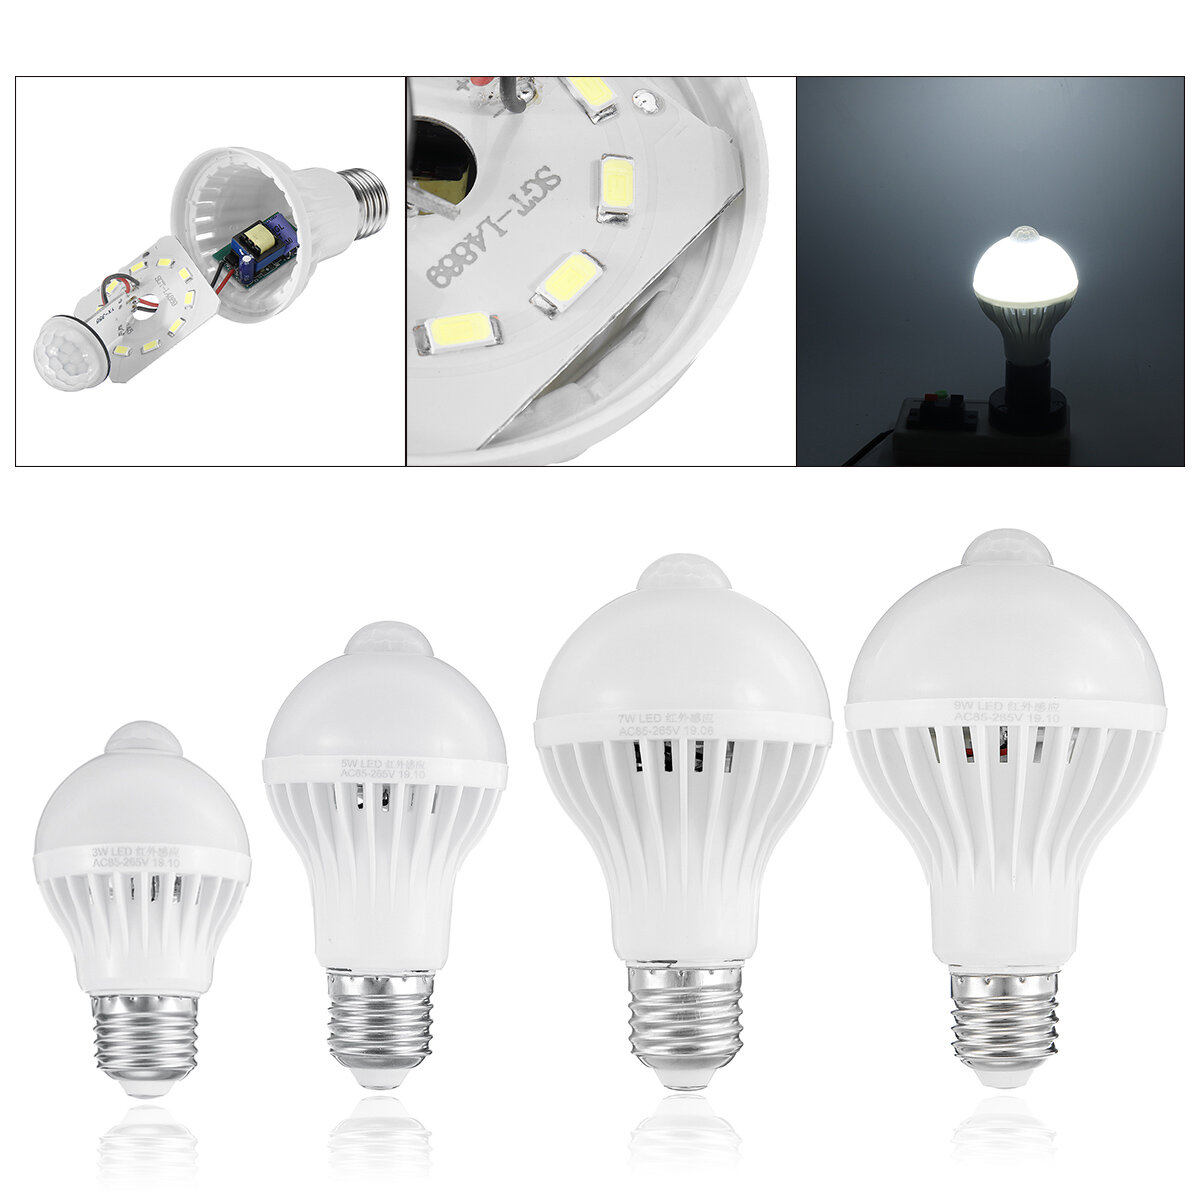 AC 85V-265V 6500K 240 lm 9W 120° E27 12 LED Globe Bulb Light Motion Sensor Lamp